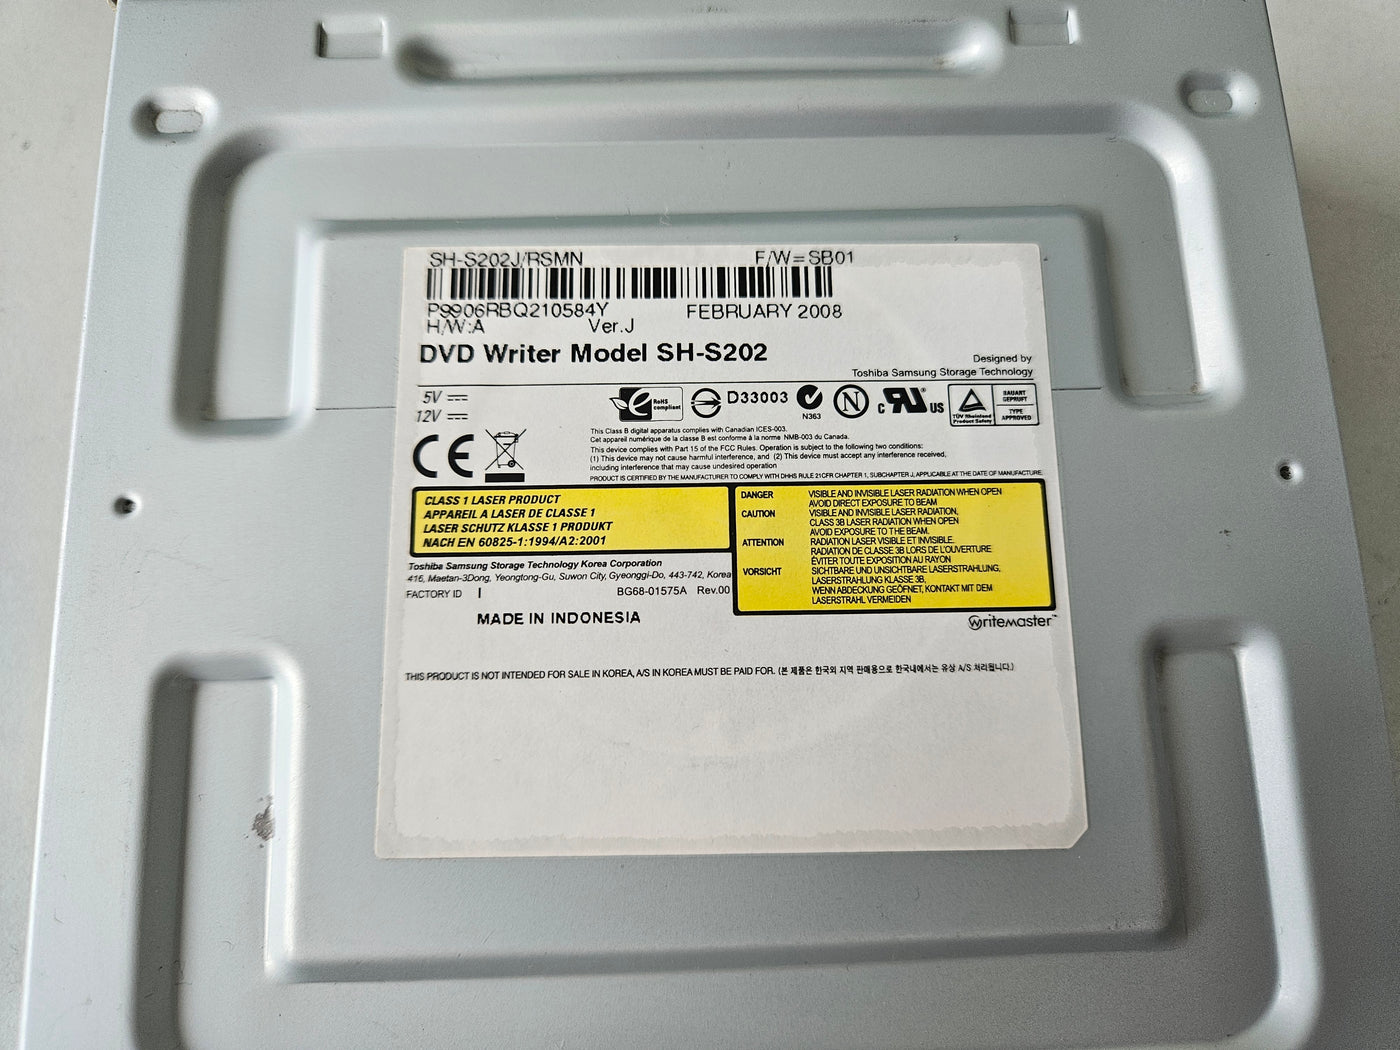 Samsung Super-WriteMaster DVD Writer Beige Bezel Drive ( SH-S202 SH-S202J/RSMN ) USED